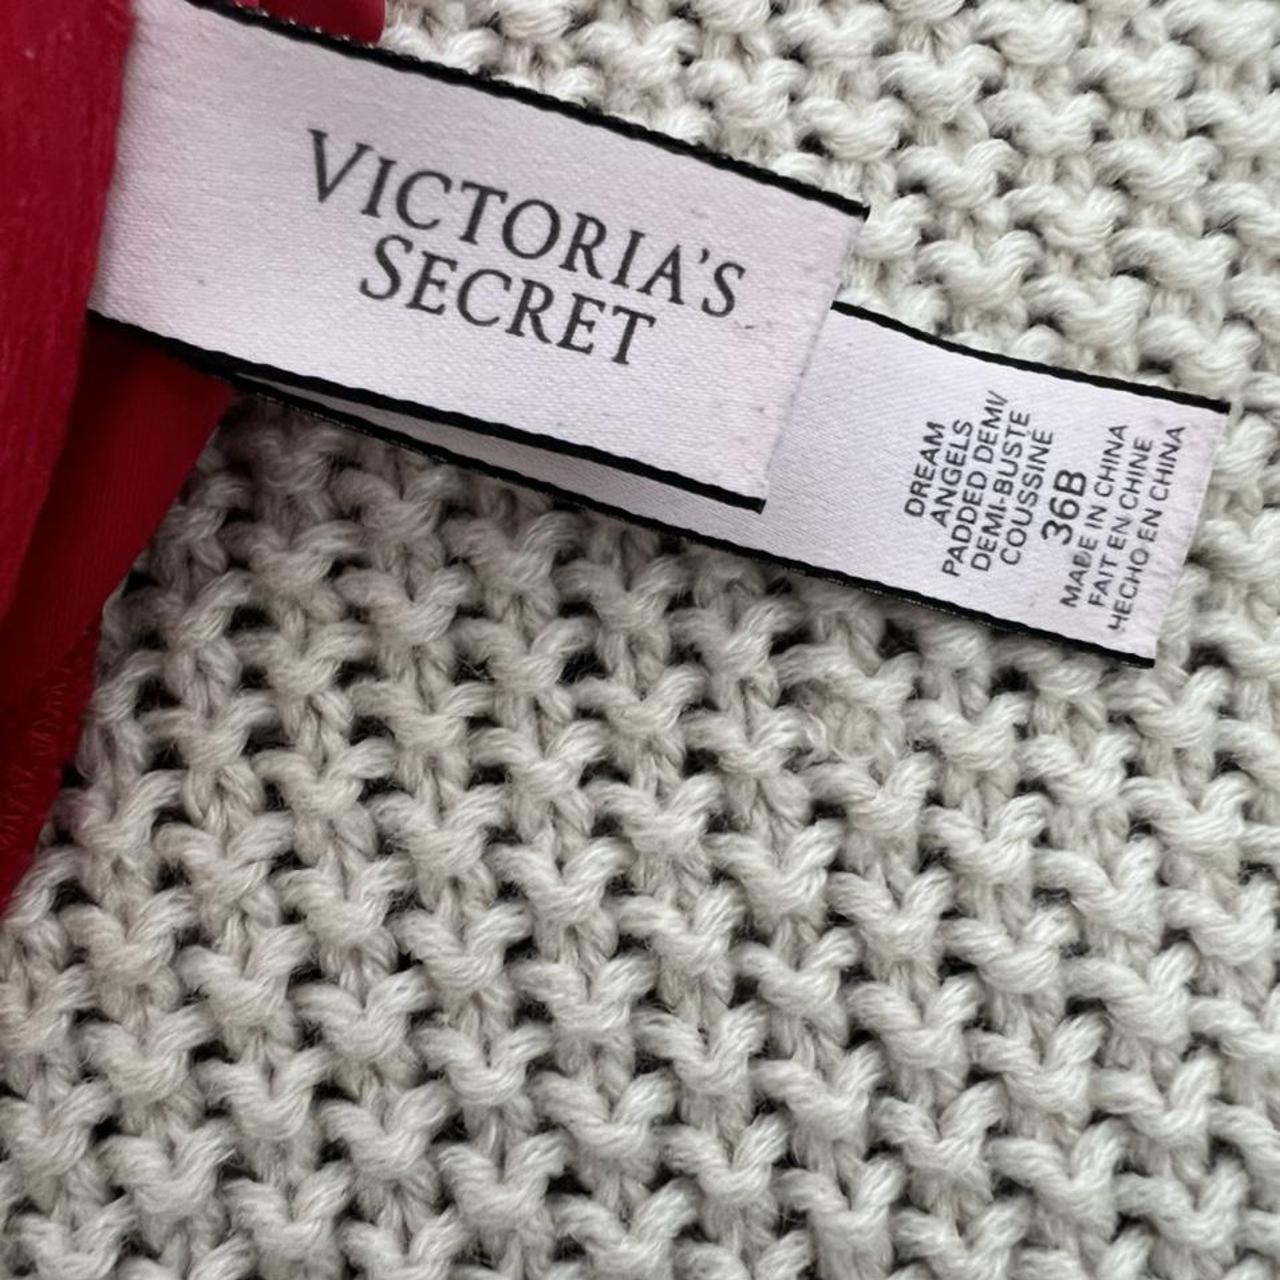 Victoria's Secret red bra padded straps size - Depop